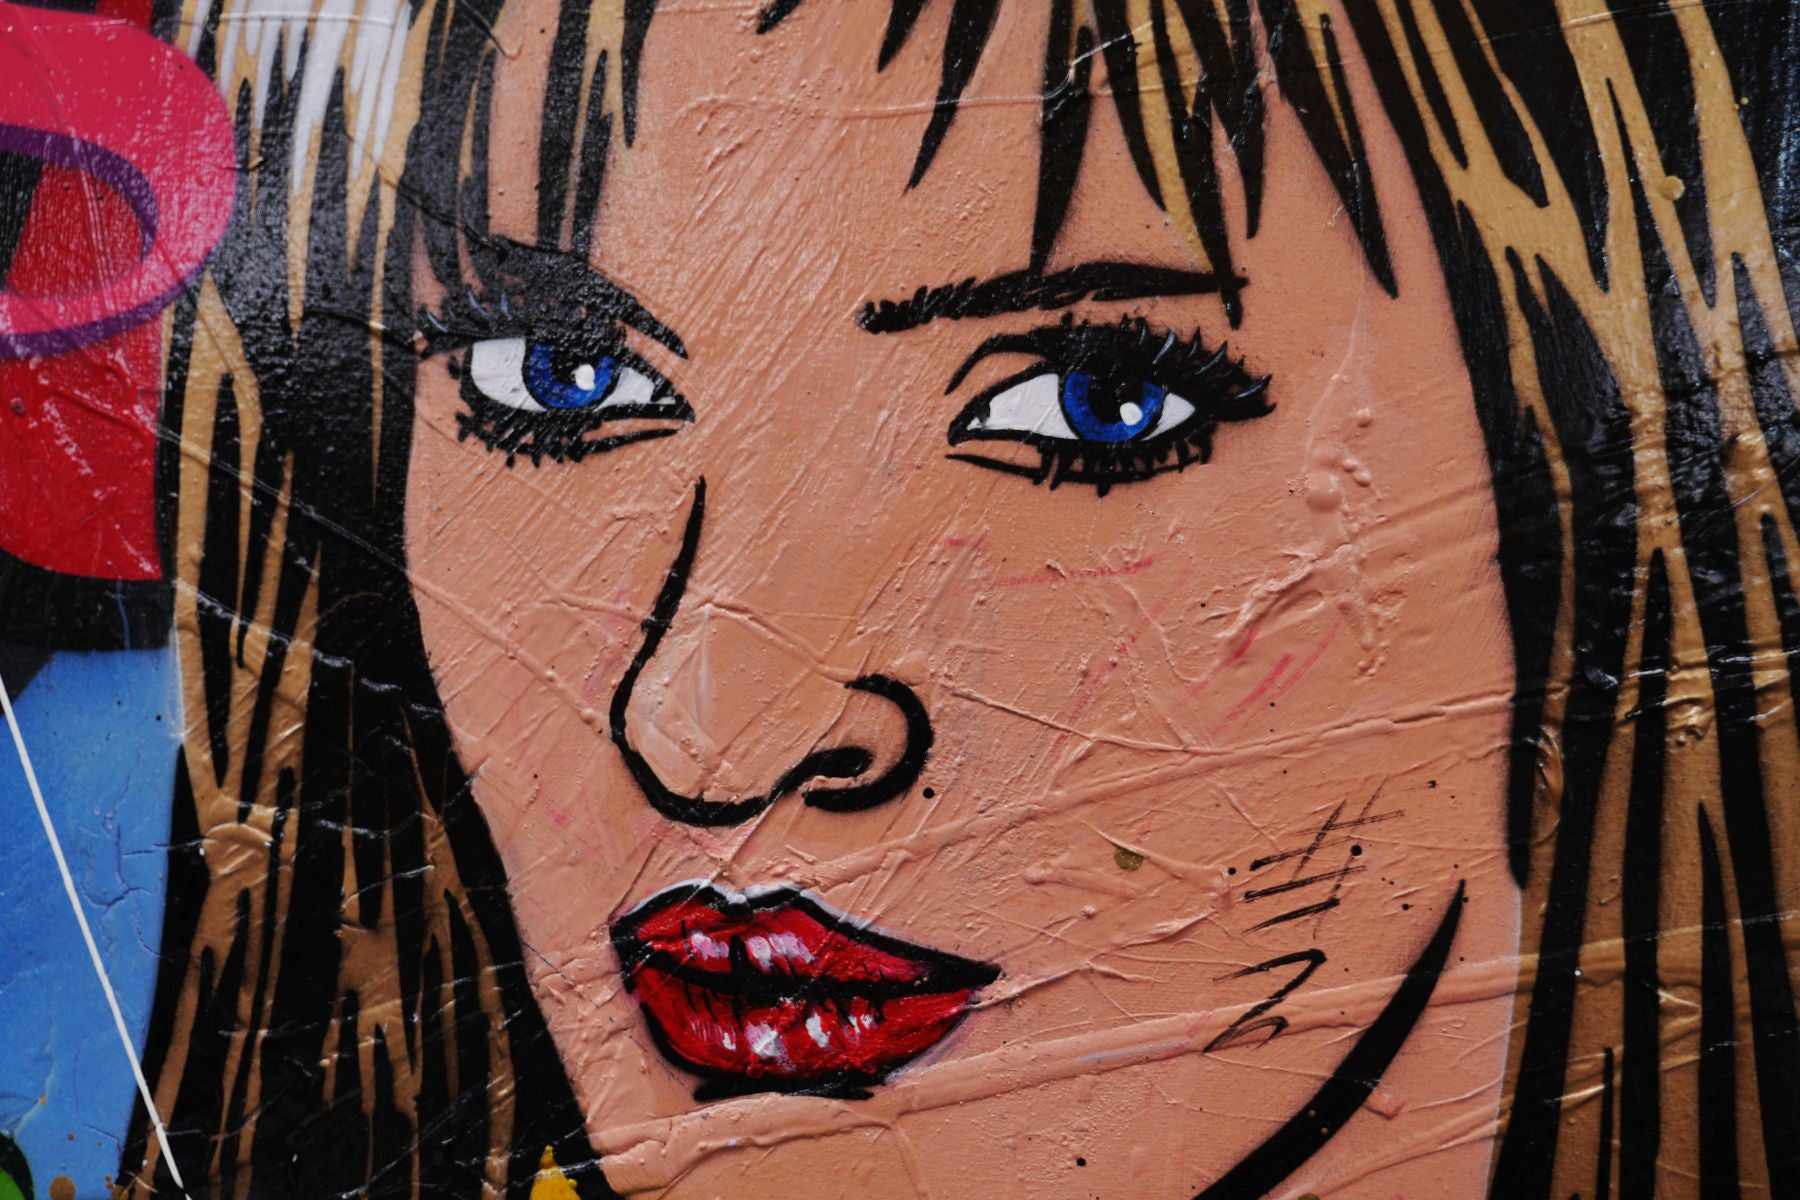 Kill Bill Volume 1 190cm x 100cm The Bride Textured Urban Pop Art Painting (SOLD)